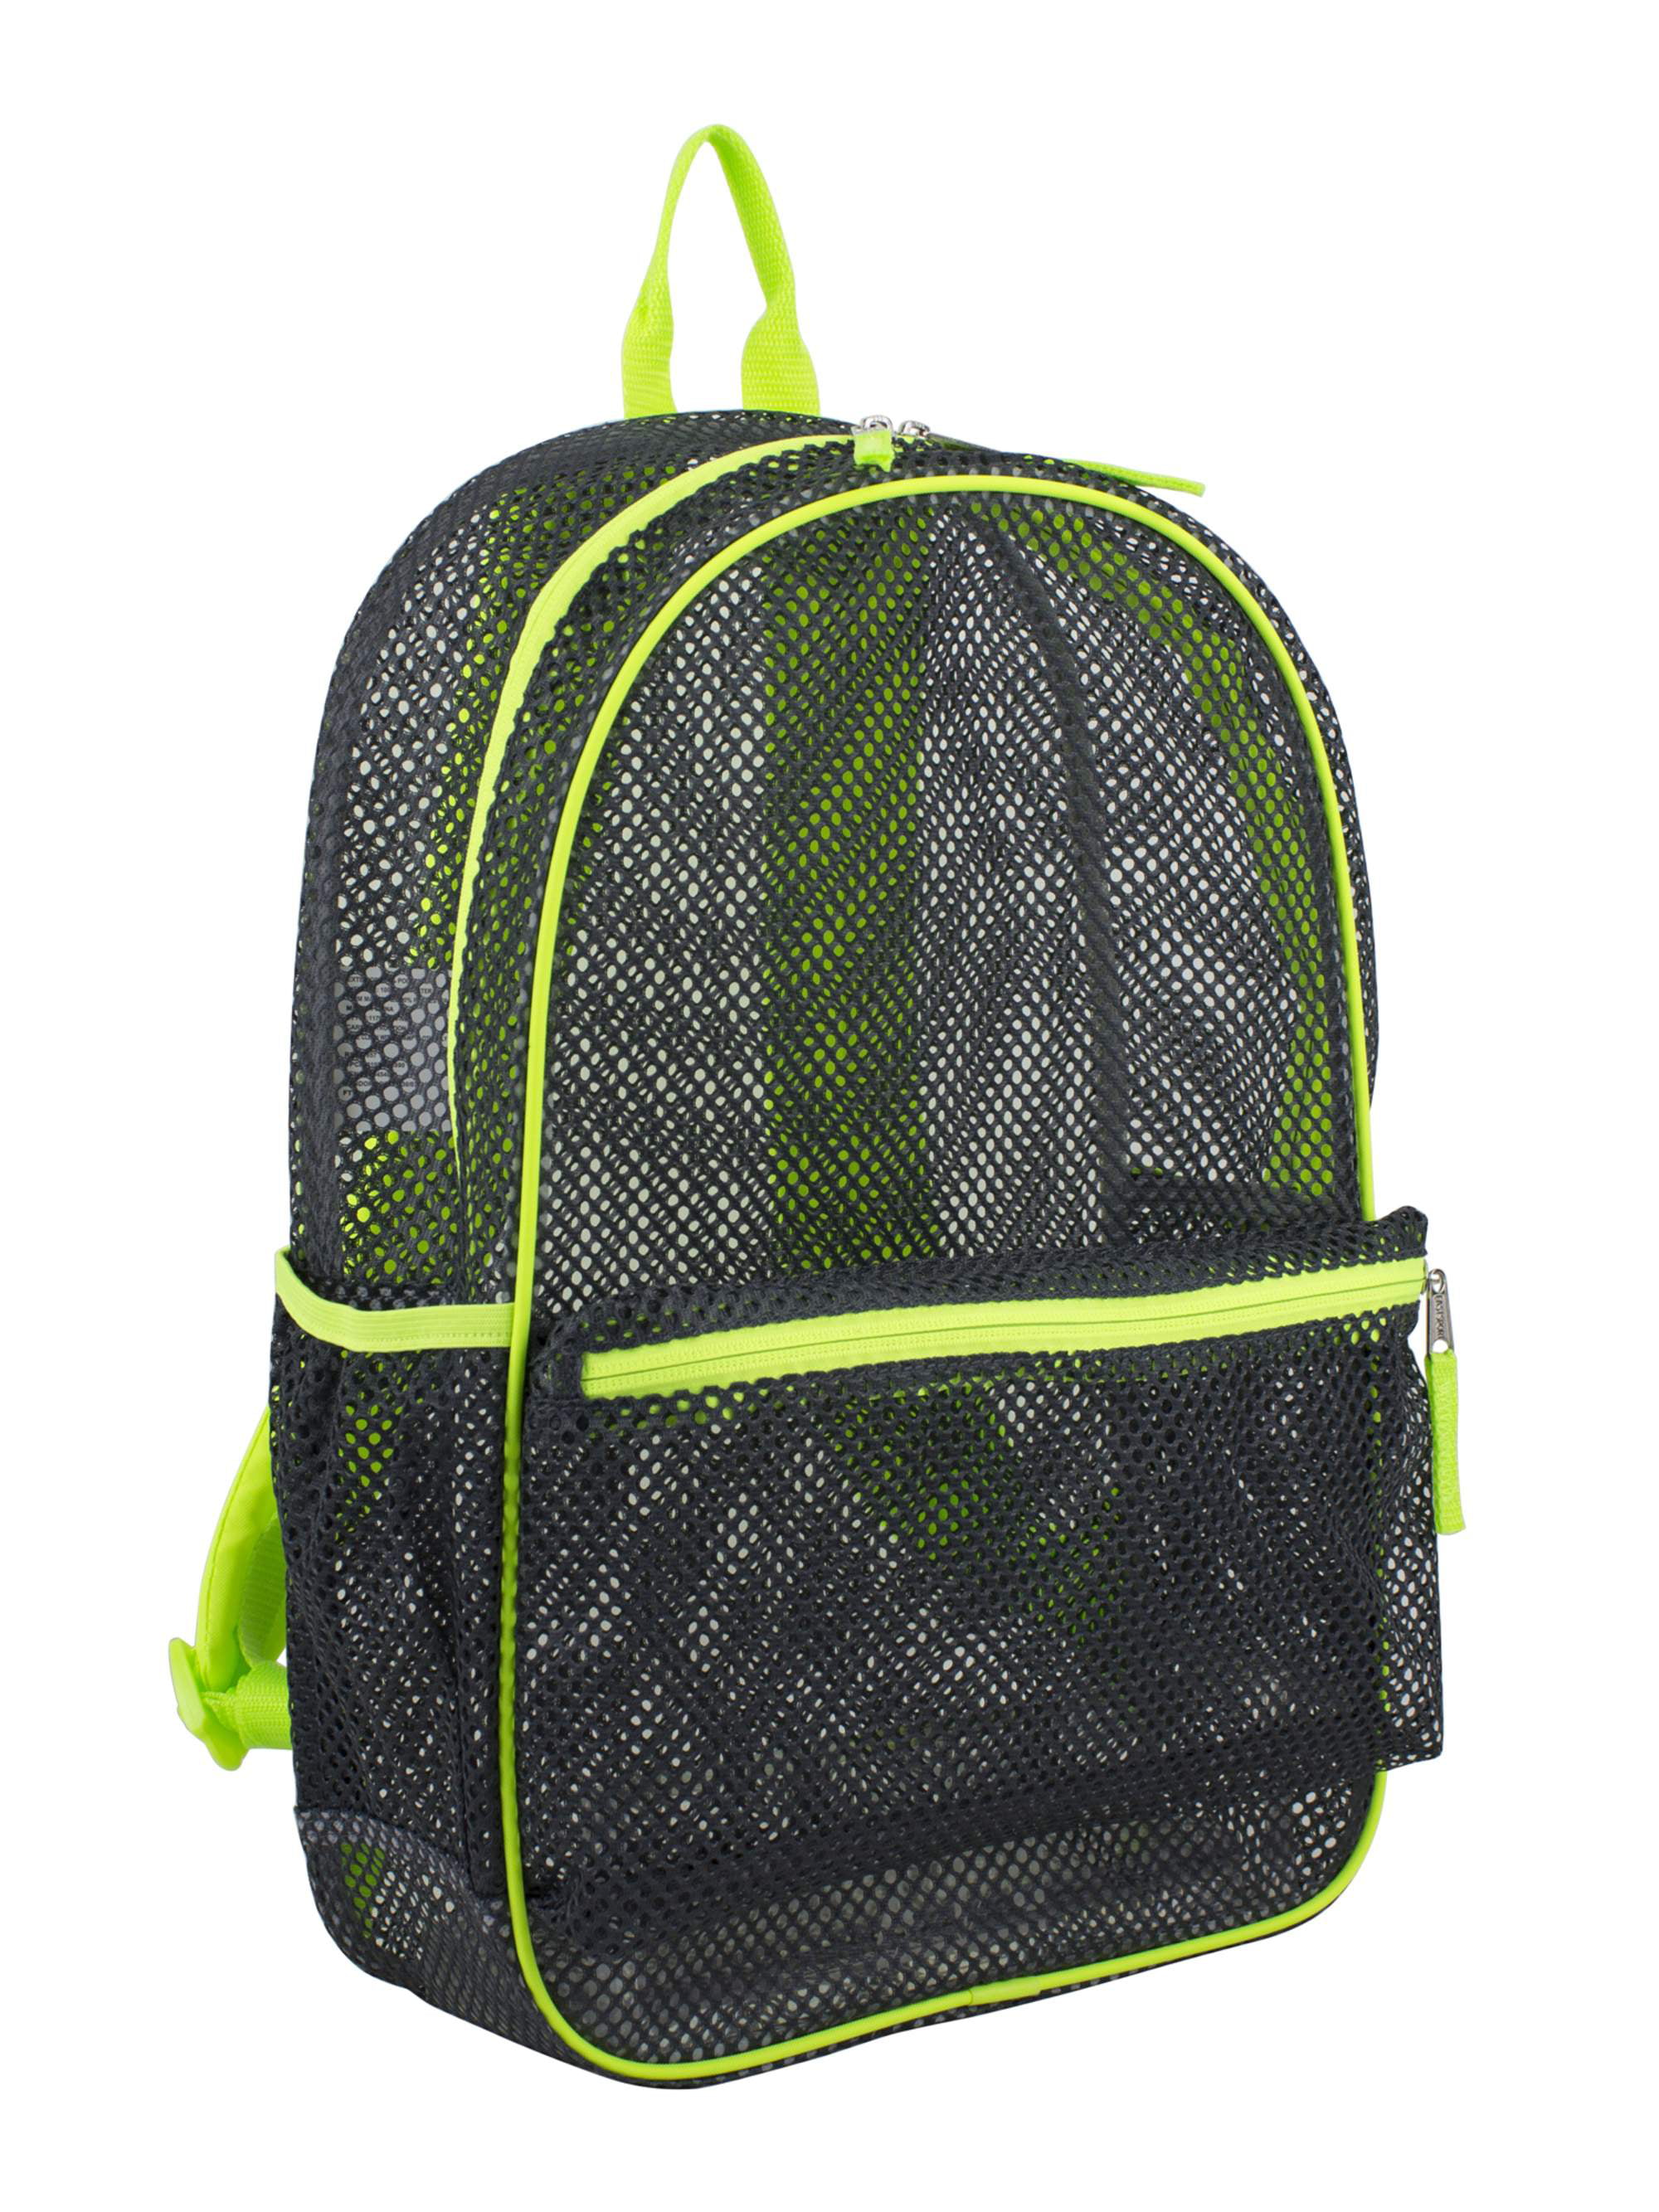 Eastsport - Mesh Backpack with Padded Adjustable Straps - 0